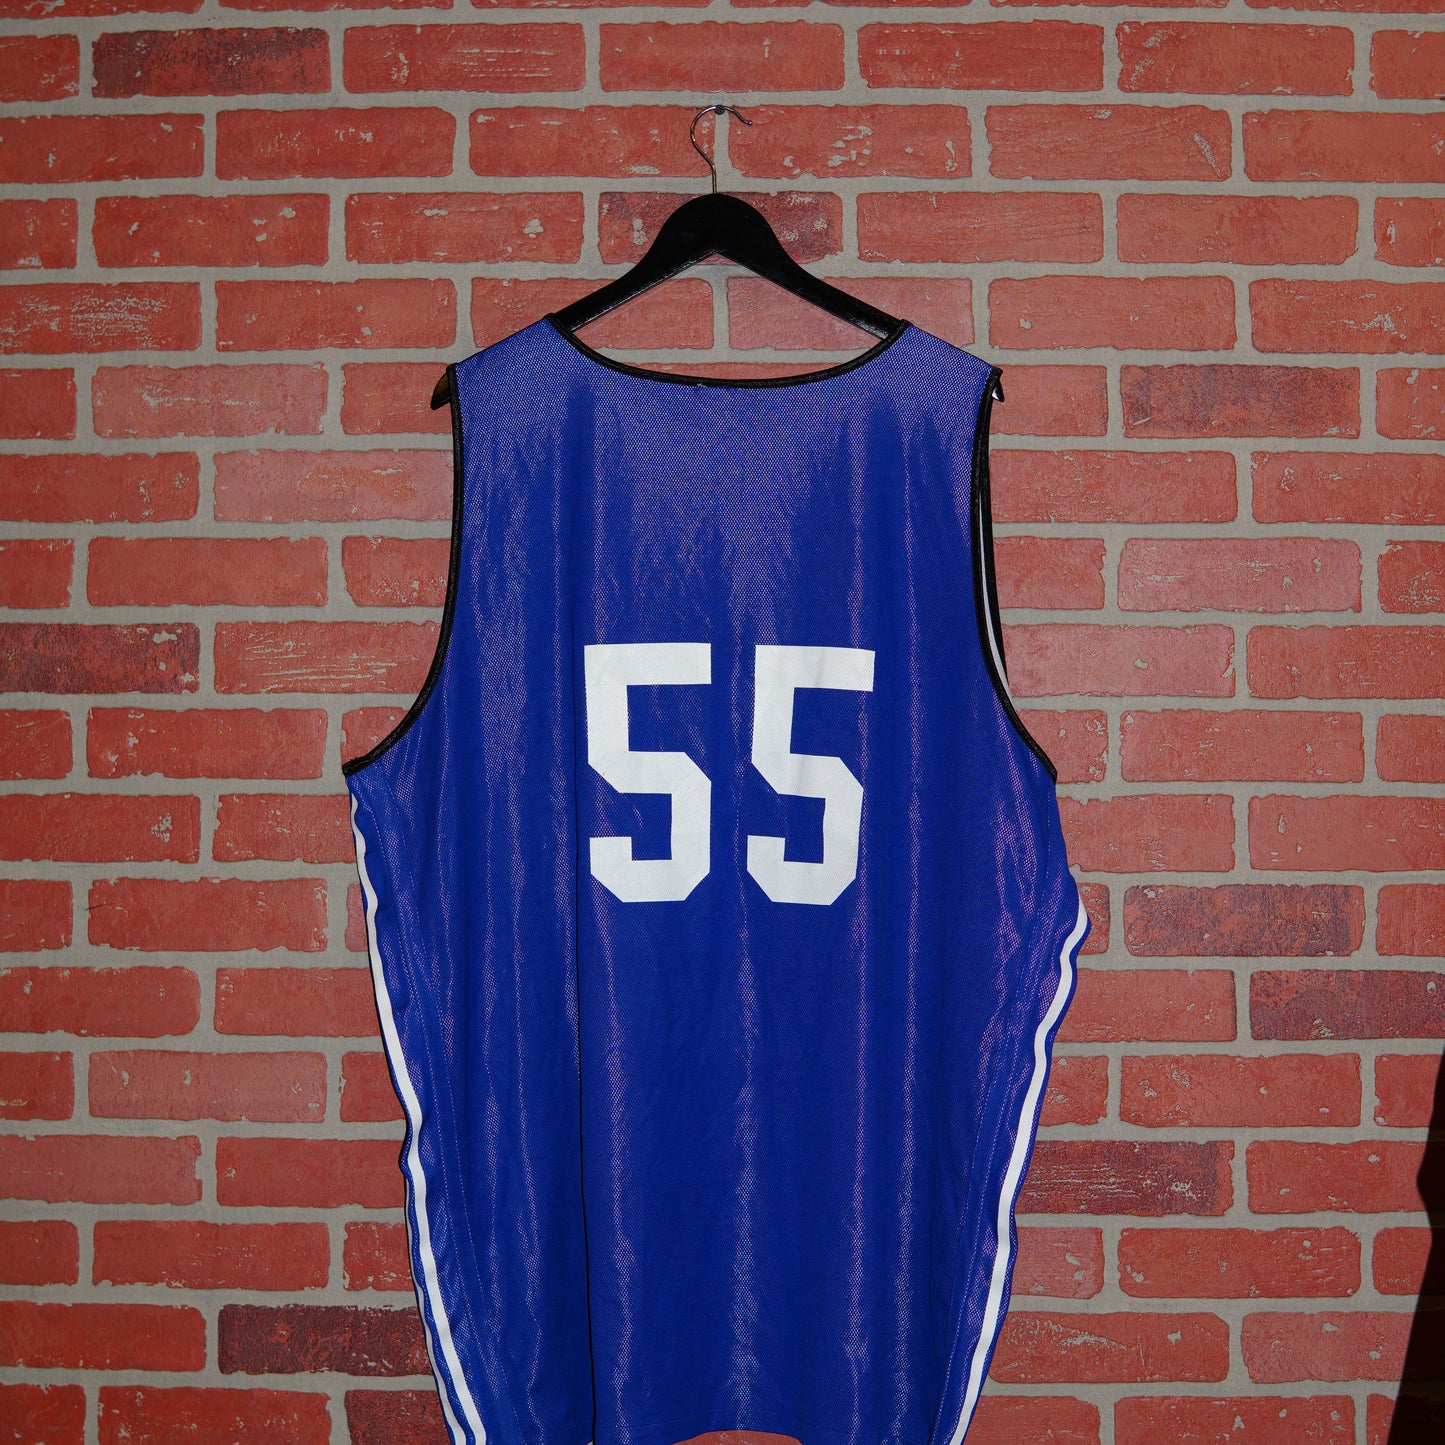 VTG Adidas NBA New York Knicks #55 Revisable Basketball Jersey